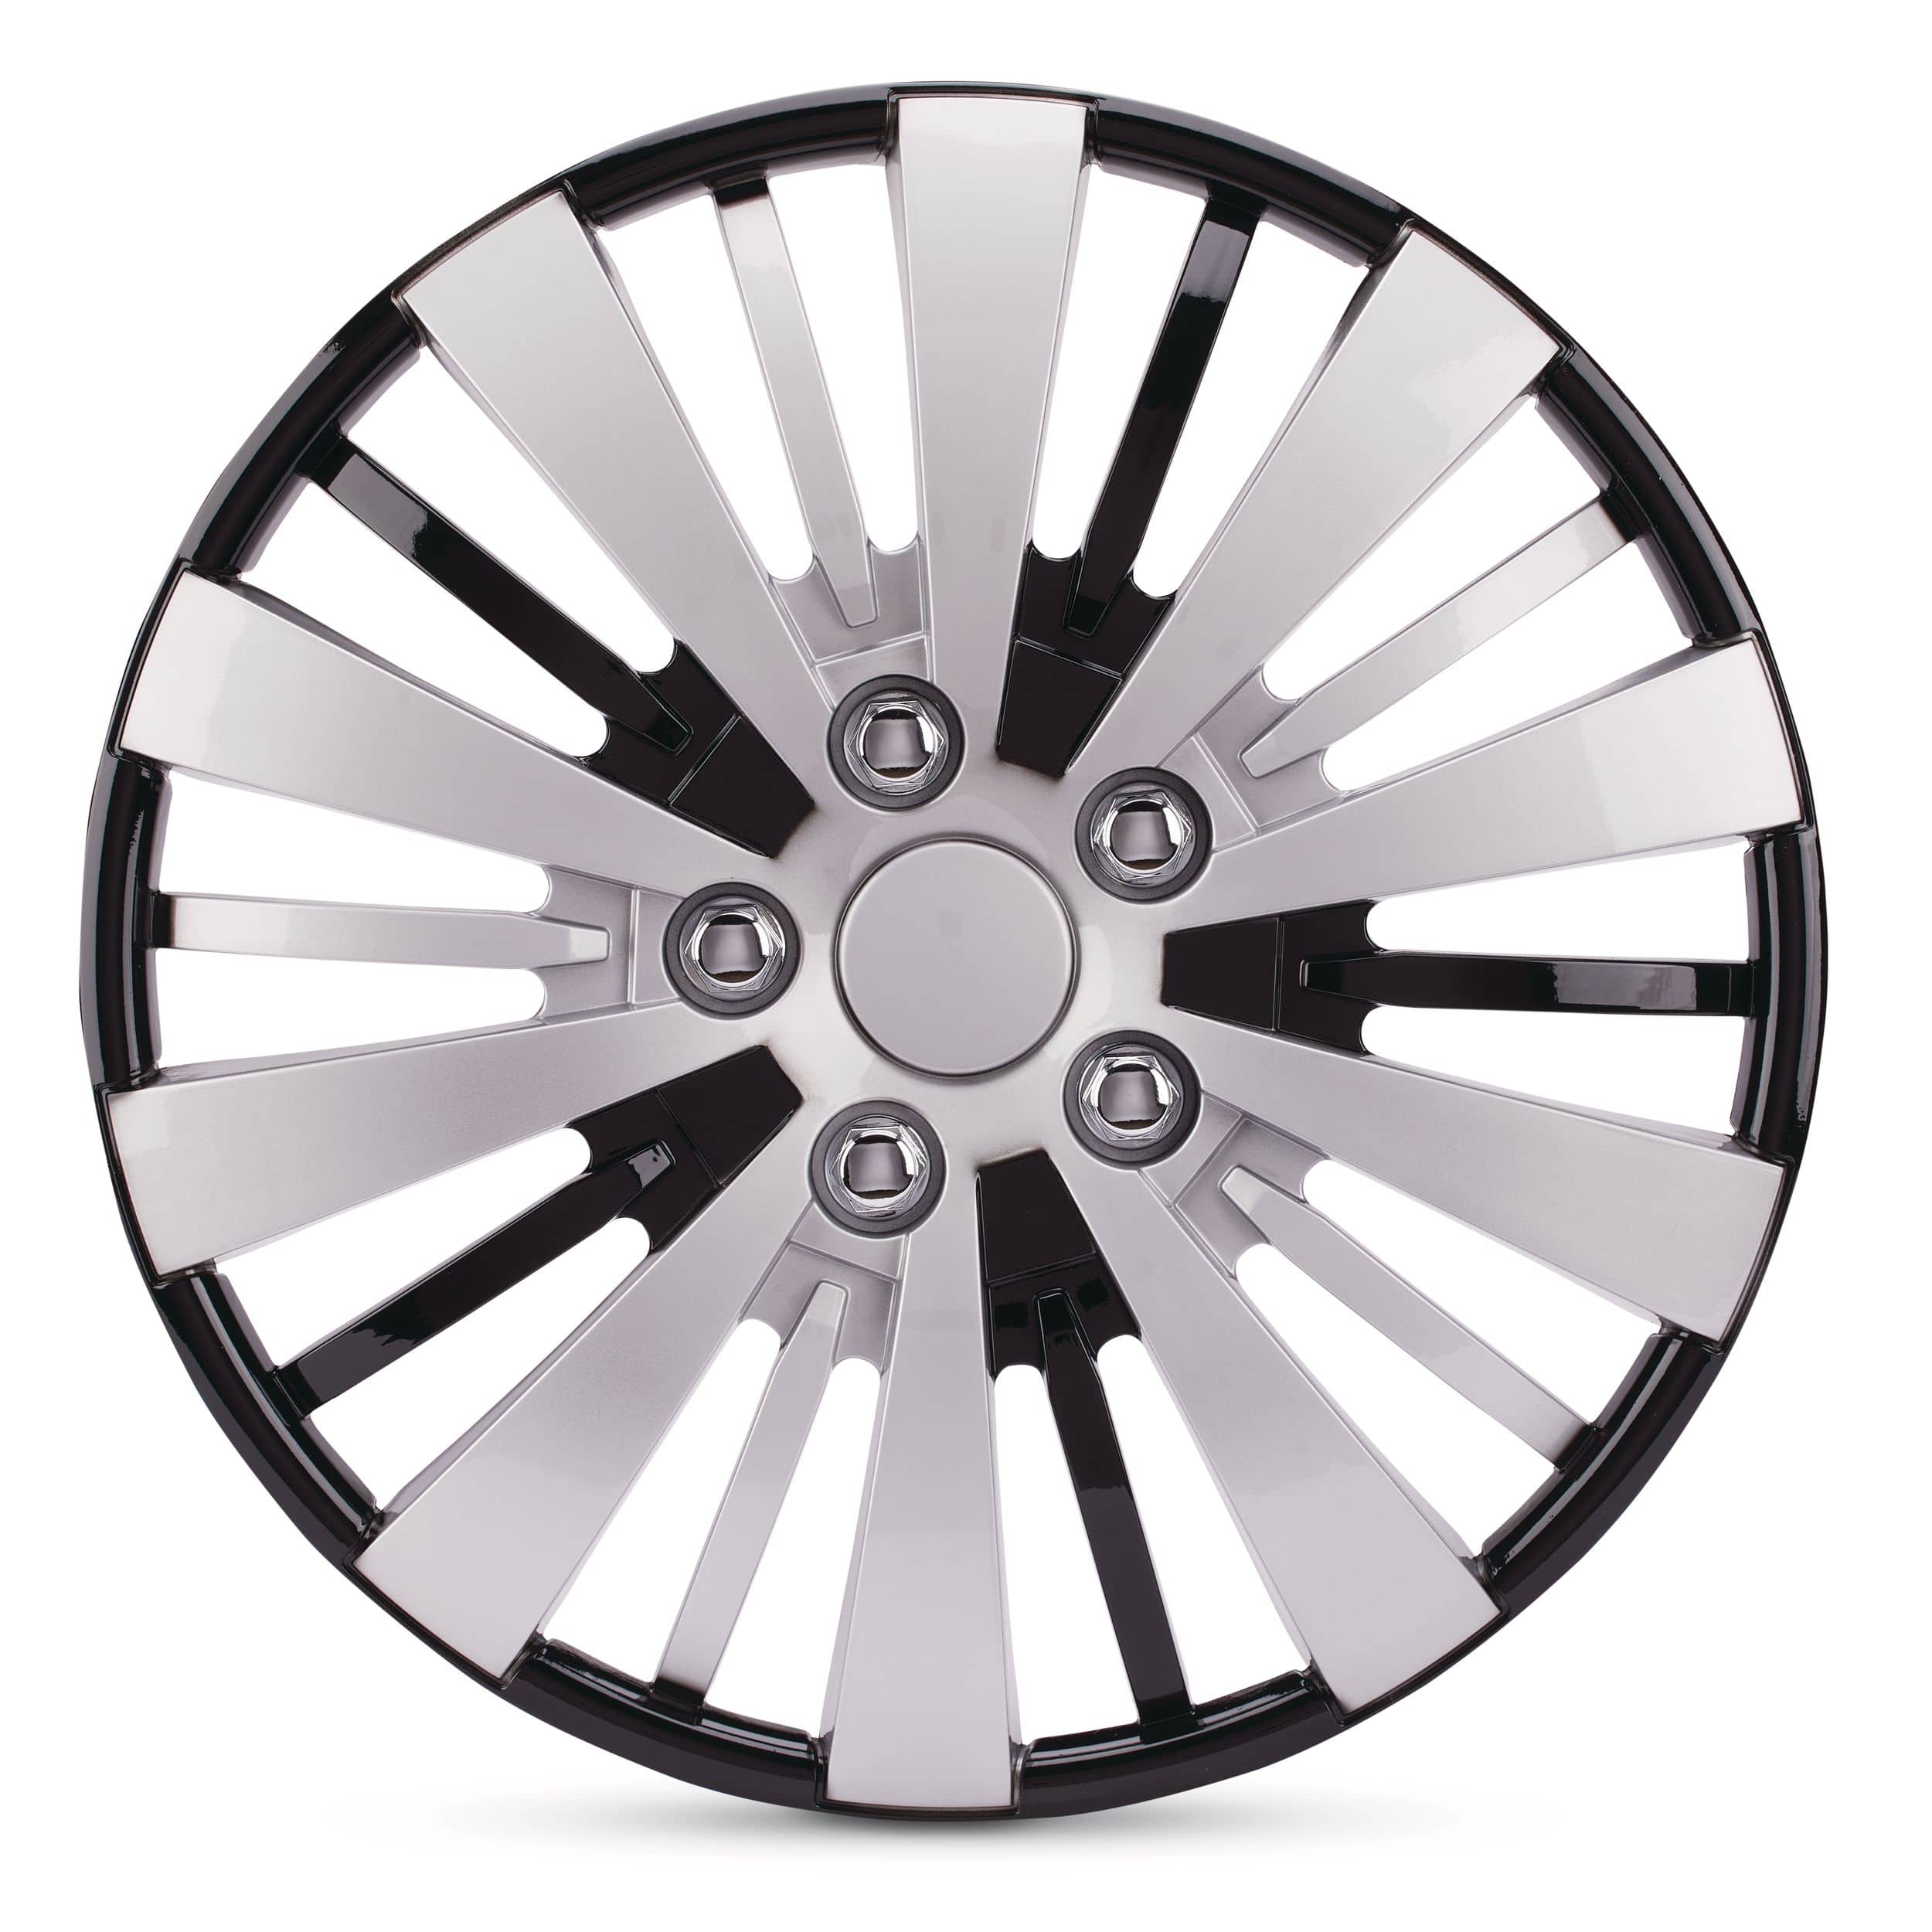 AutoTrends 80-1467SE Wheel Cover, Silver/Black, 17-in, 4-pk